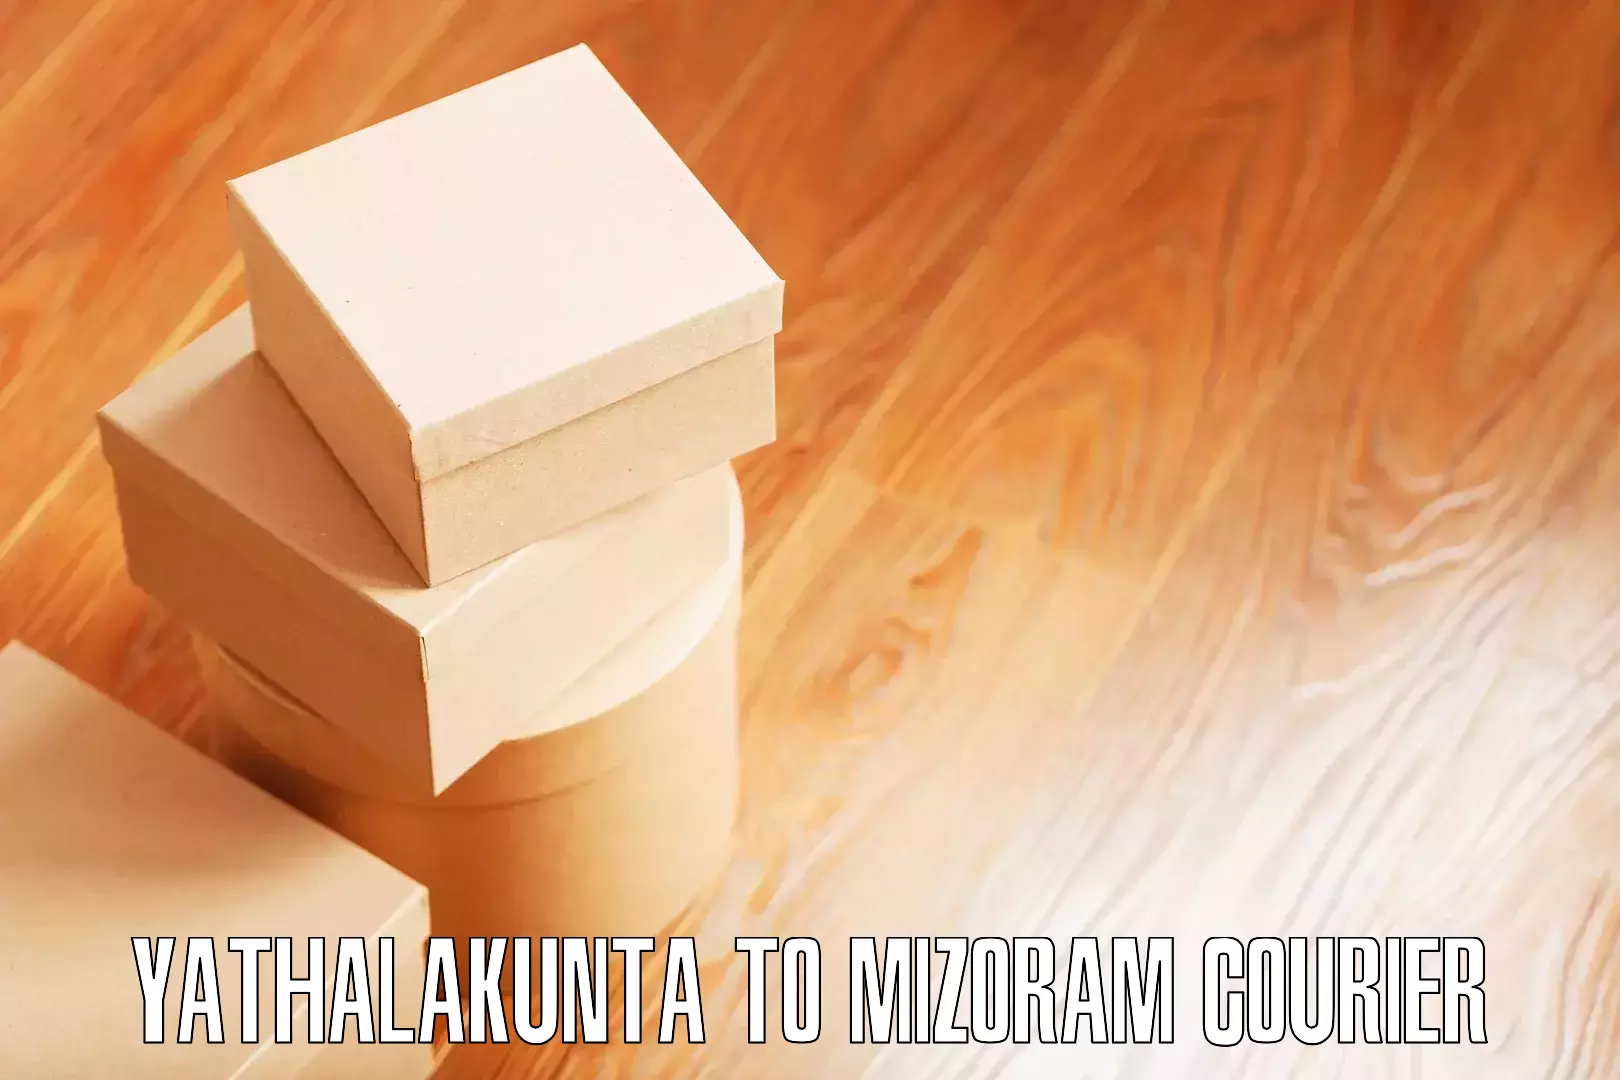 Cost-effective furniture movers Yathalakunta to Mizoram